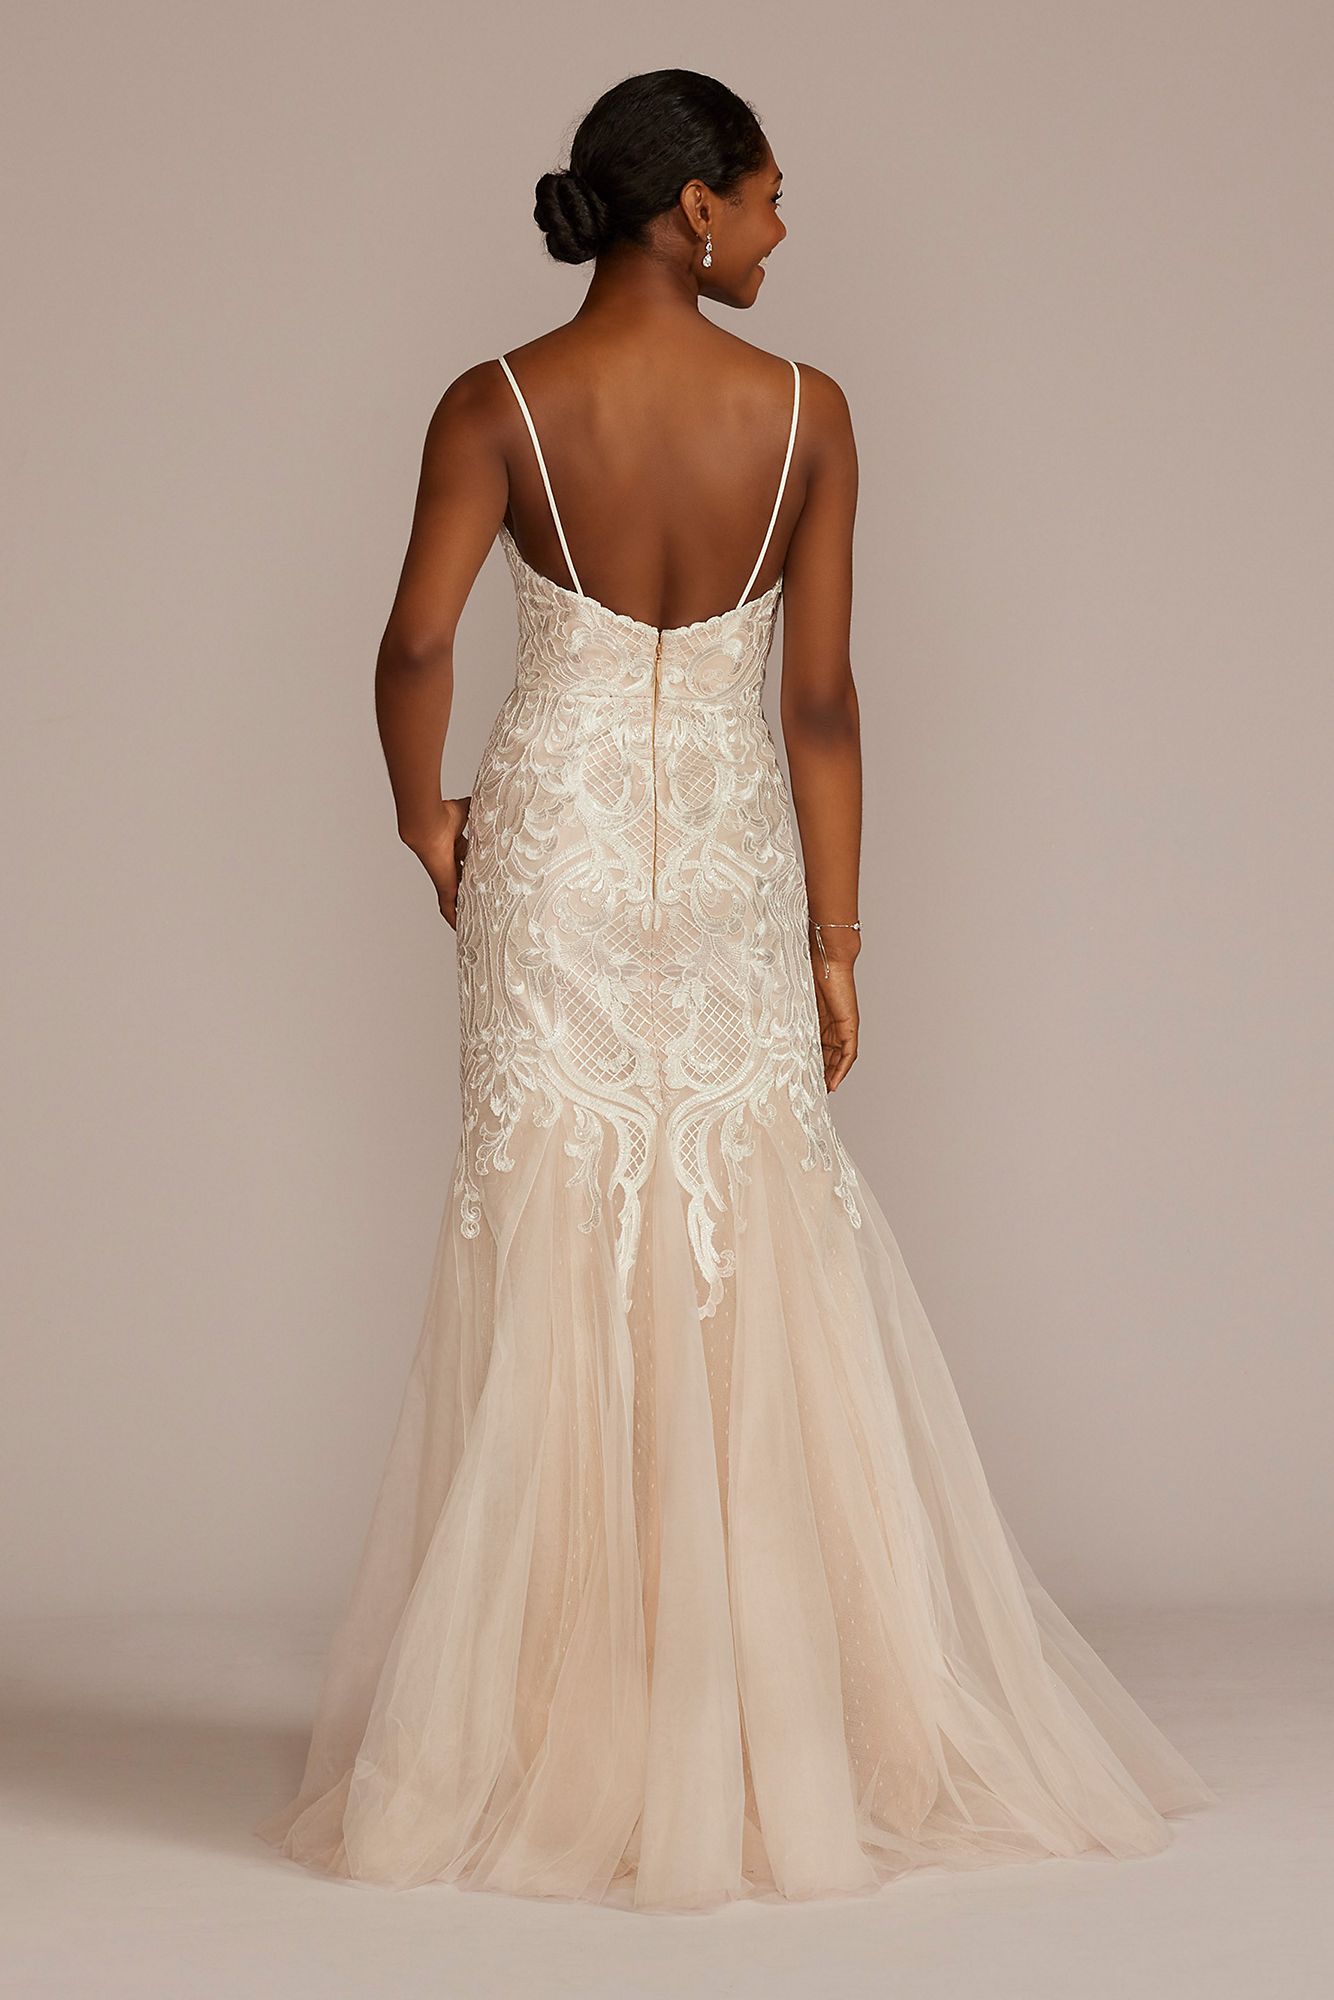 Plunging V-Neck Wedding Gown with Godet Skirt DB Studio WG4064